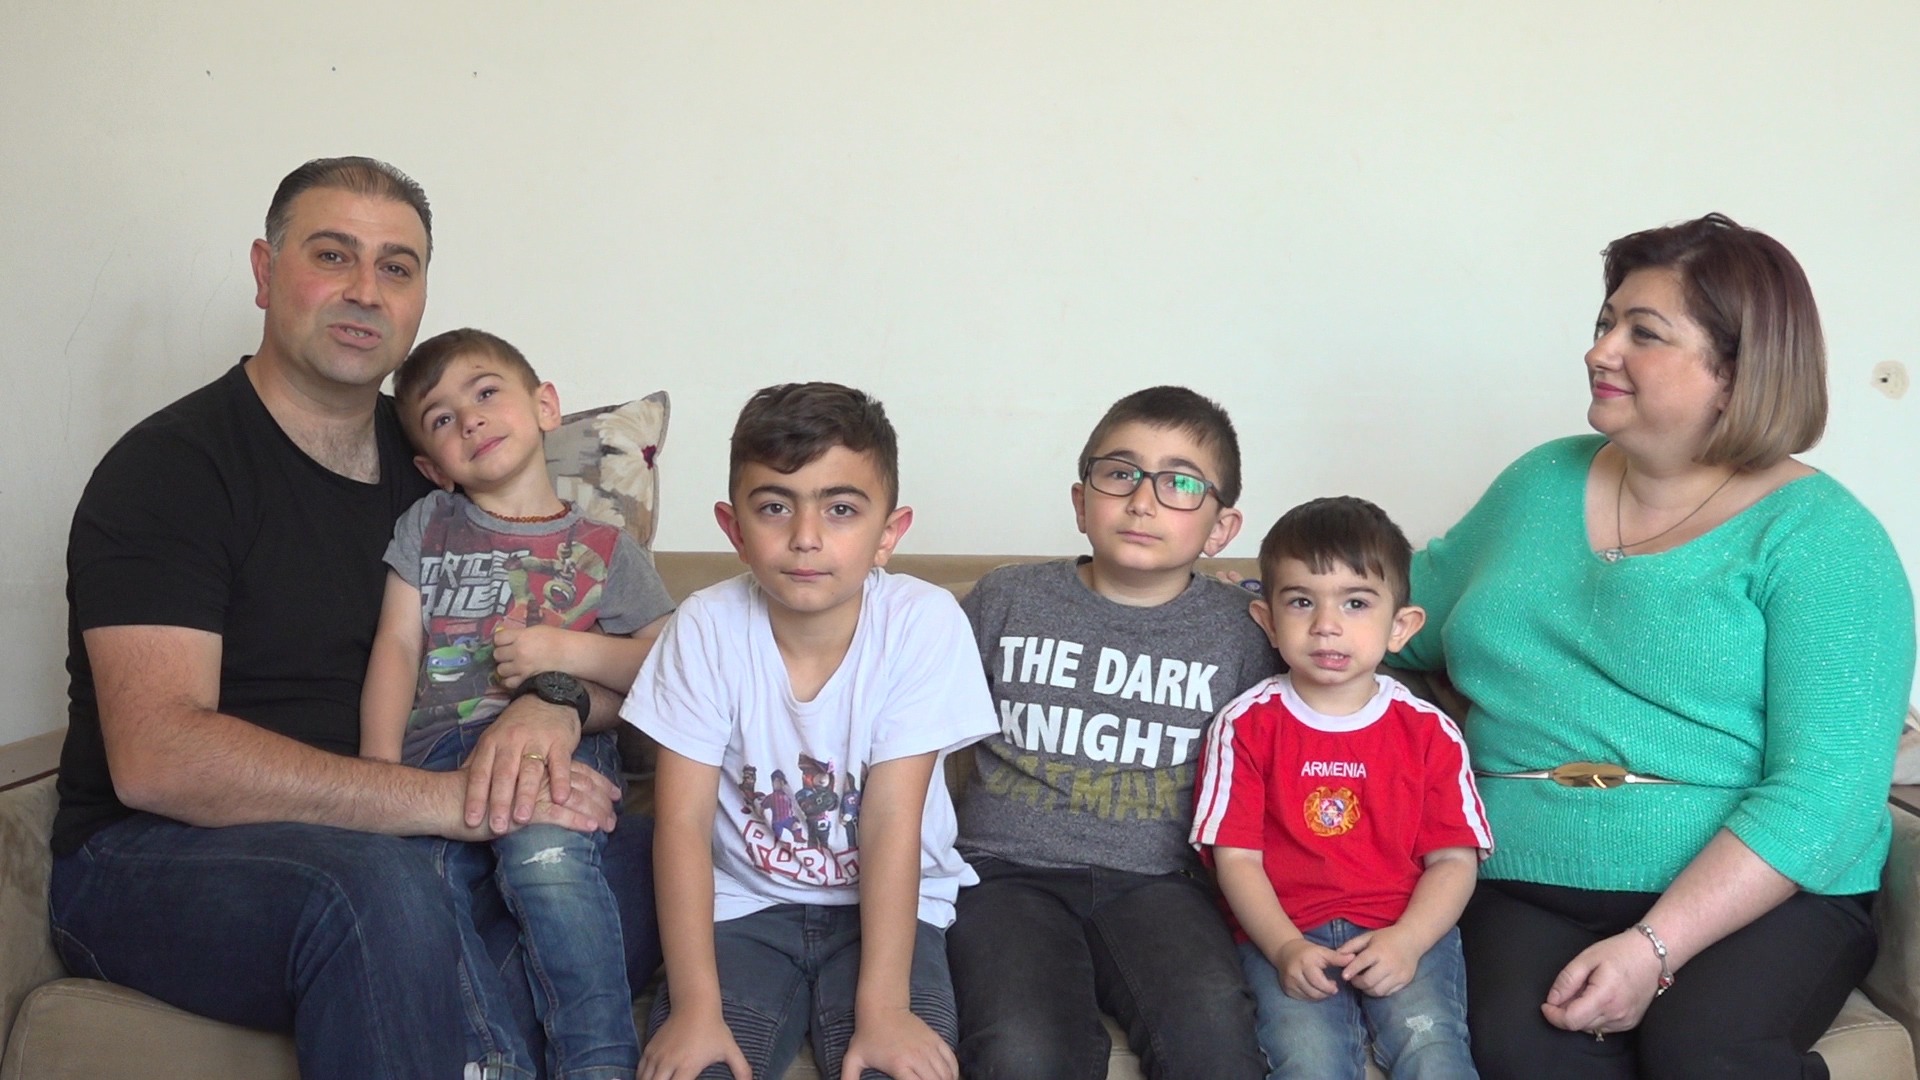 A Sydney Family’s Story of Repatriation to Armenia